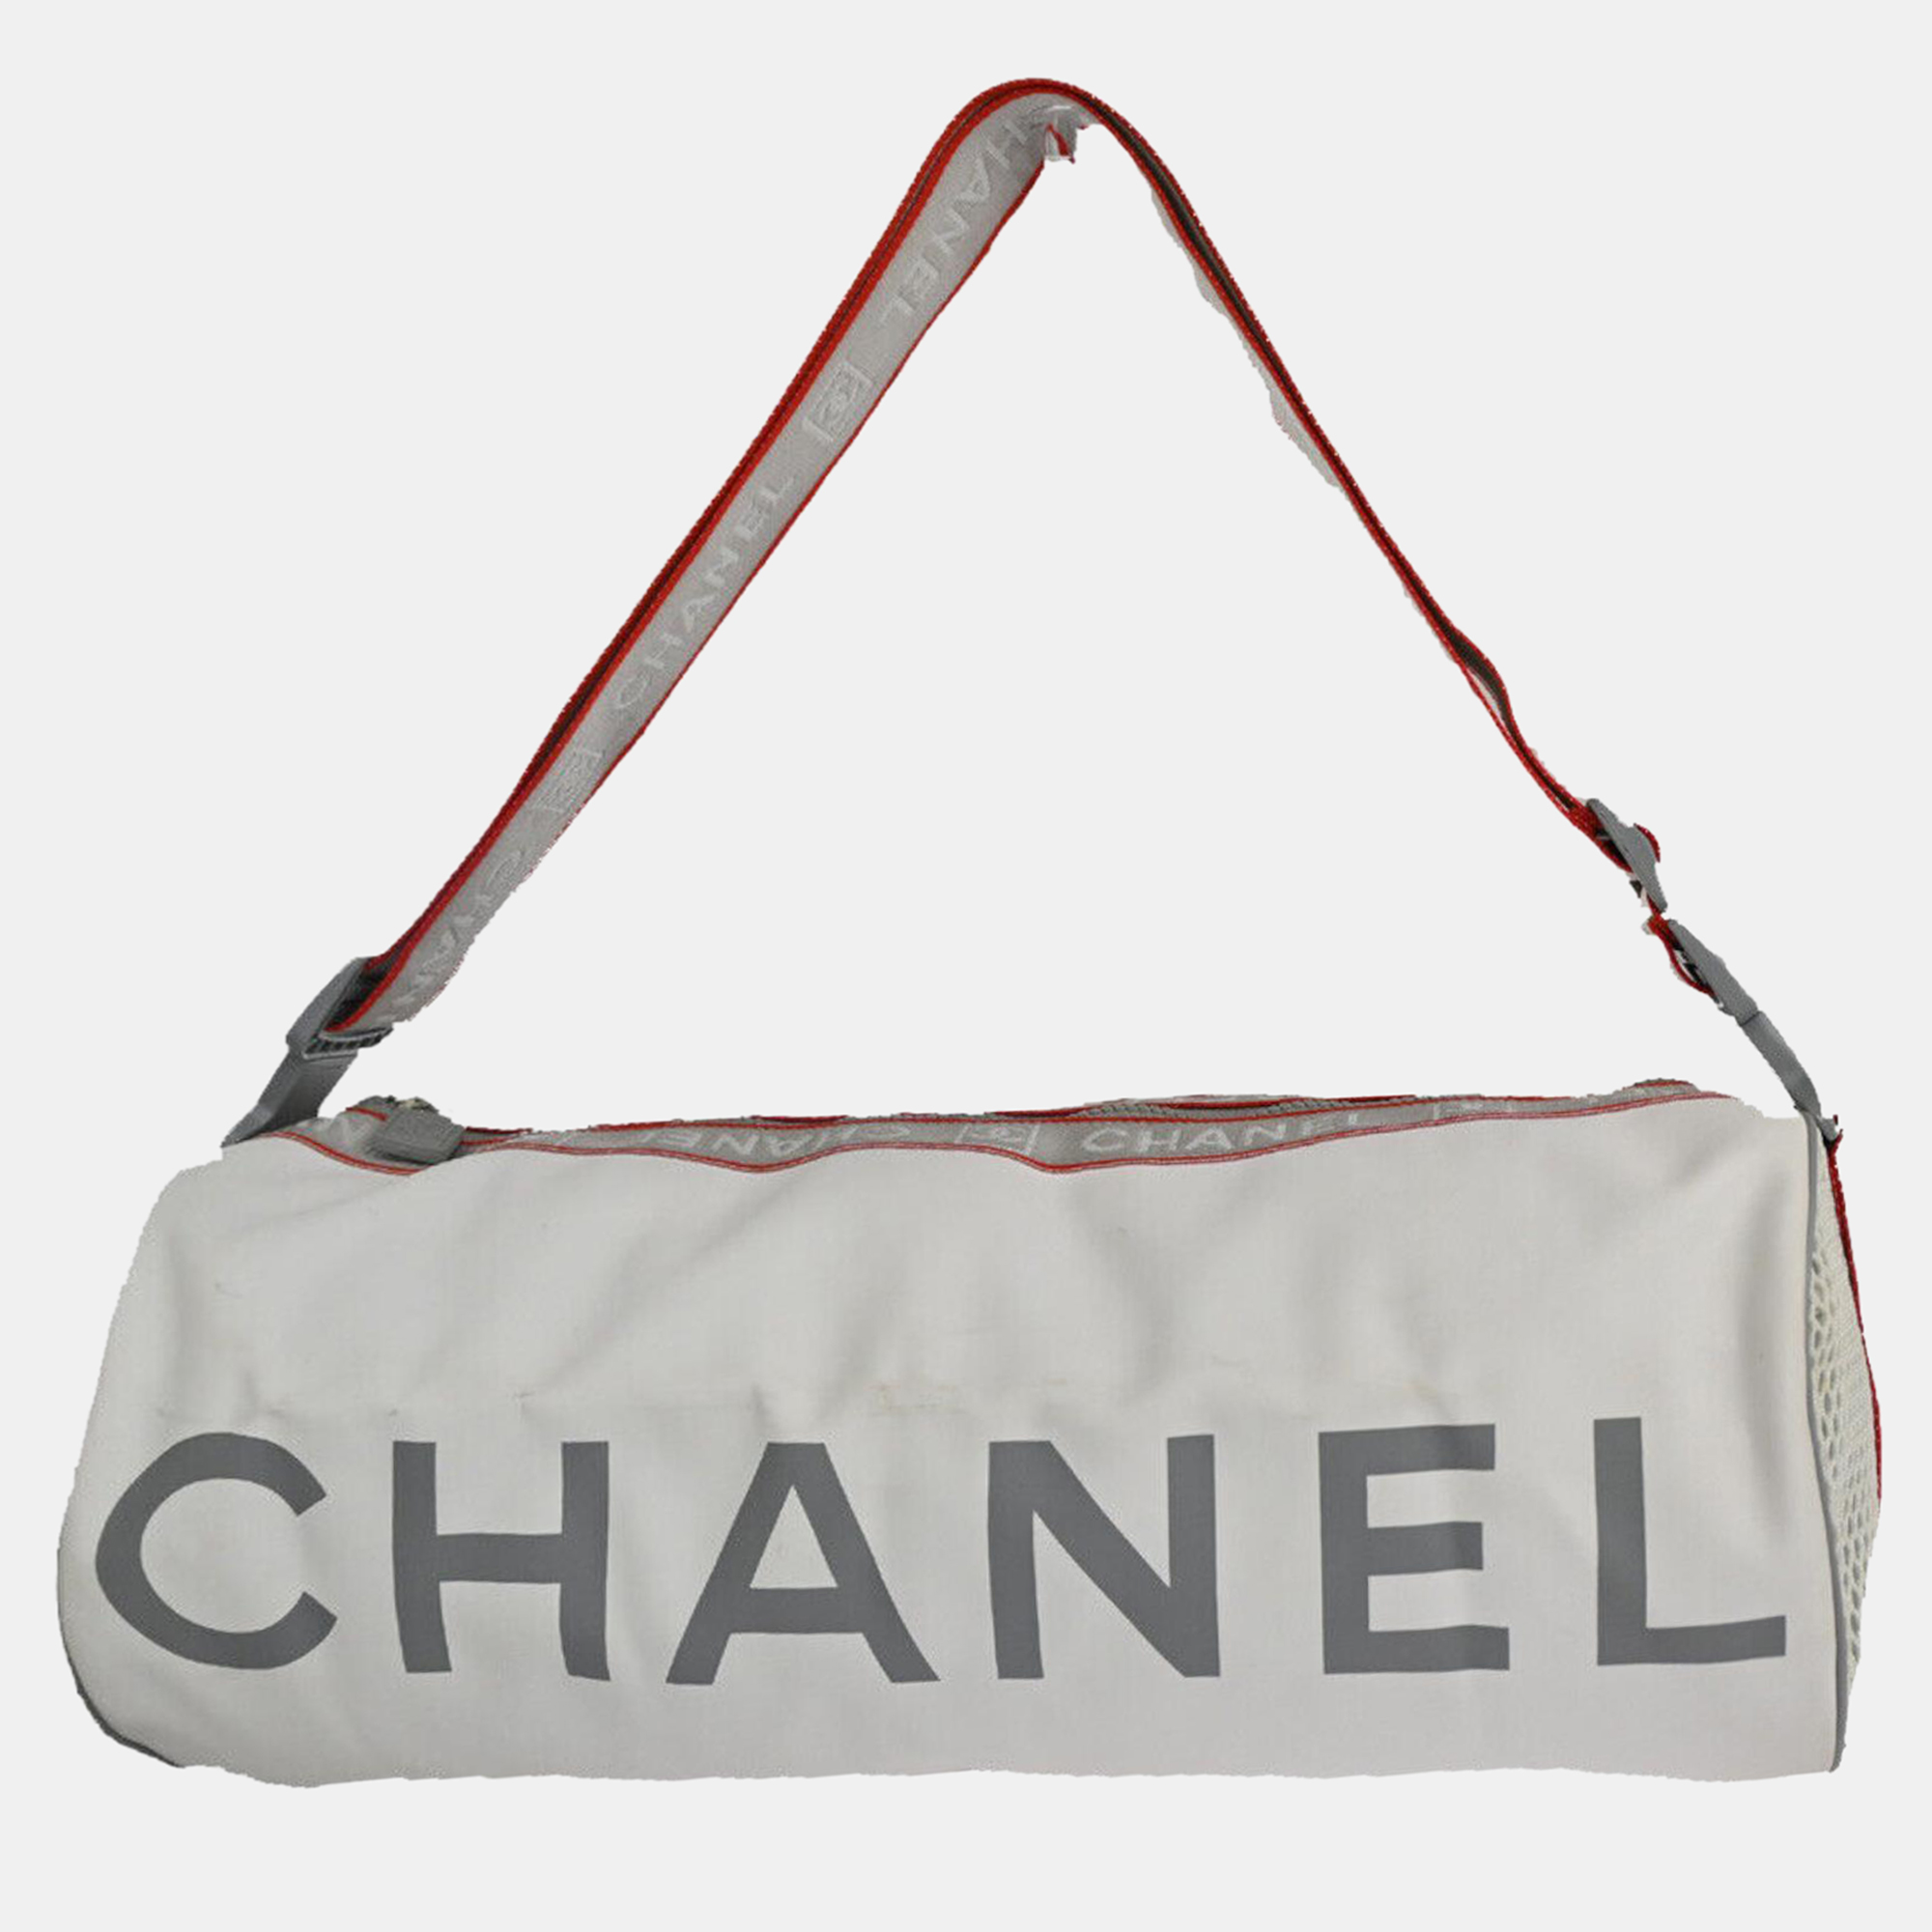 Chanel white synthetic sport line shoulder bag